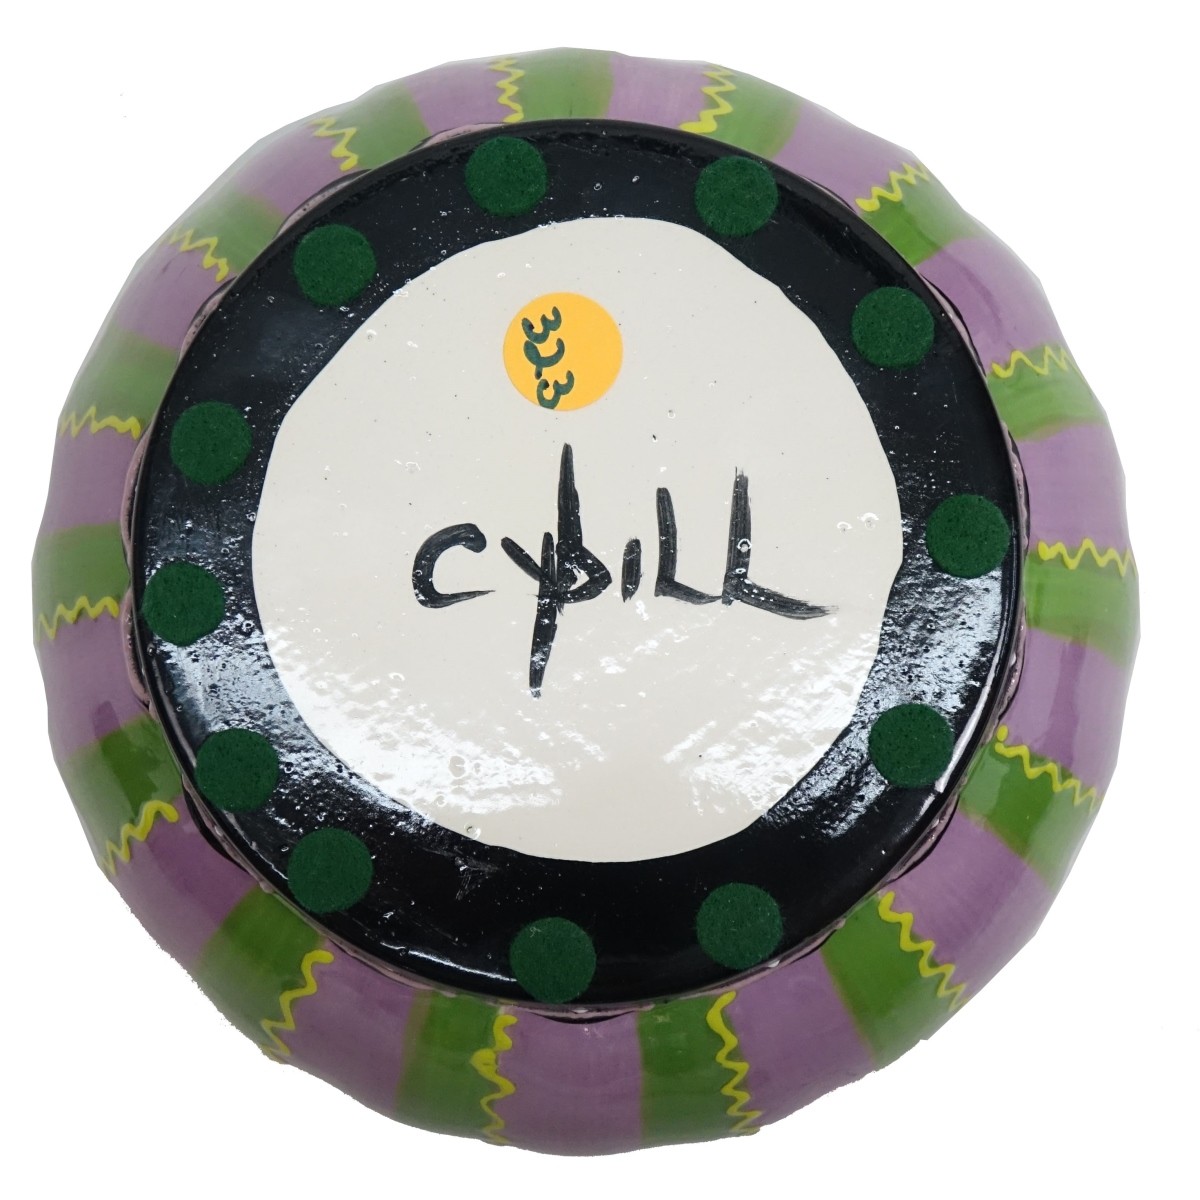 Cybill Covered Jar